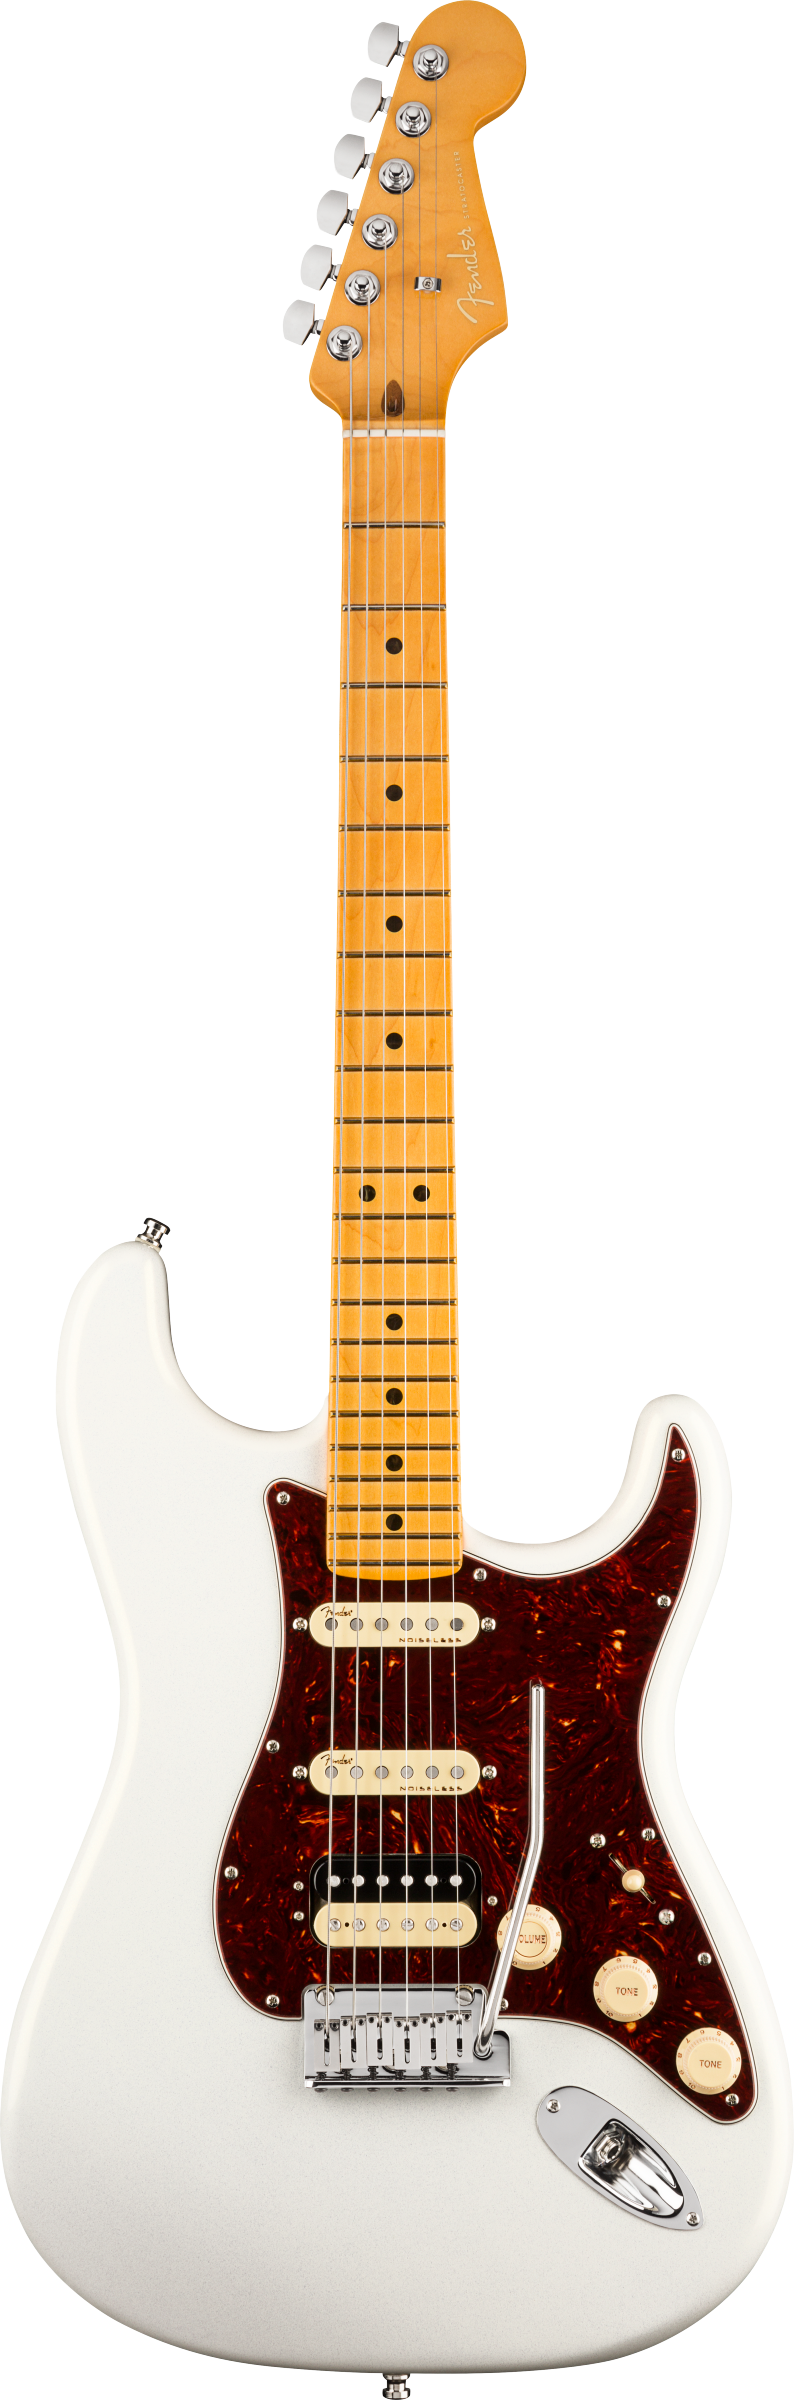 Fender Stratocaster electric guitar in Arctic Pear White Tone Shop Guitars Dallas Texas